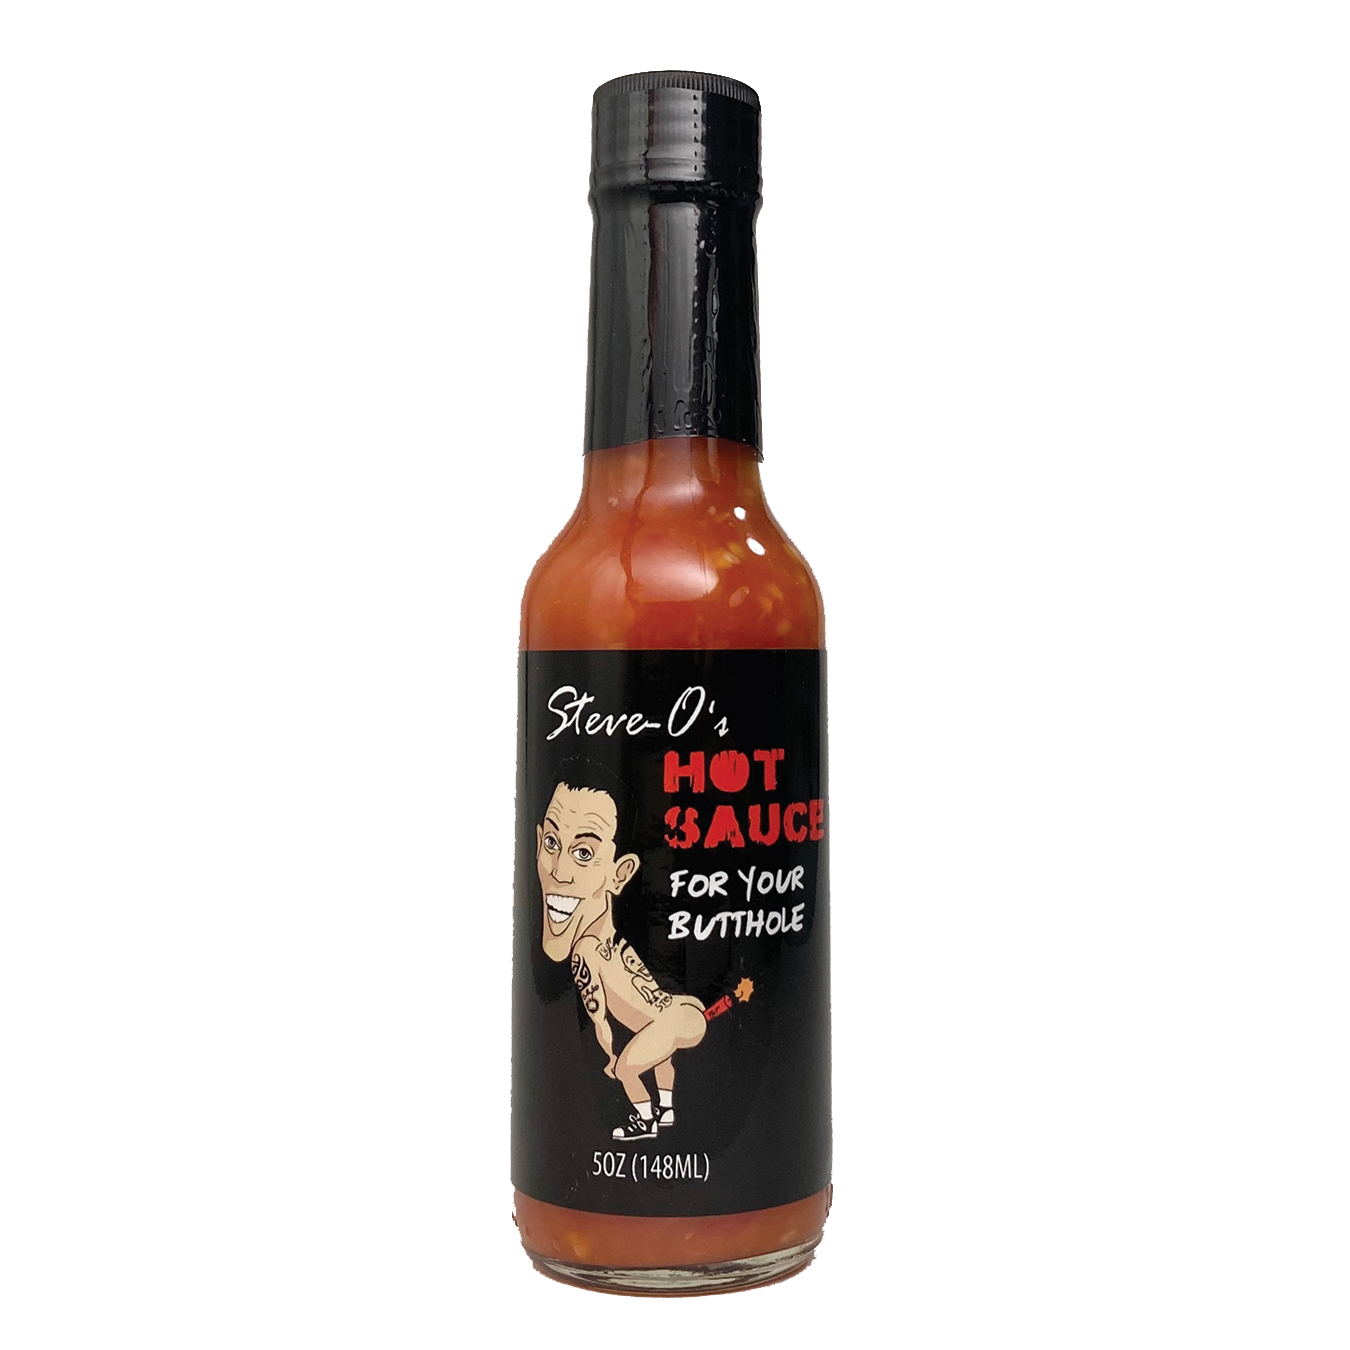 Steve O's Hot Sauce